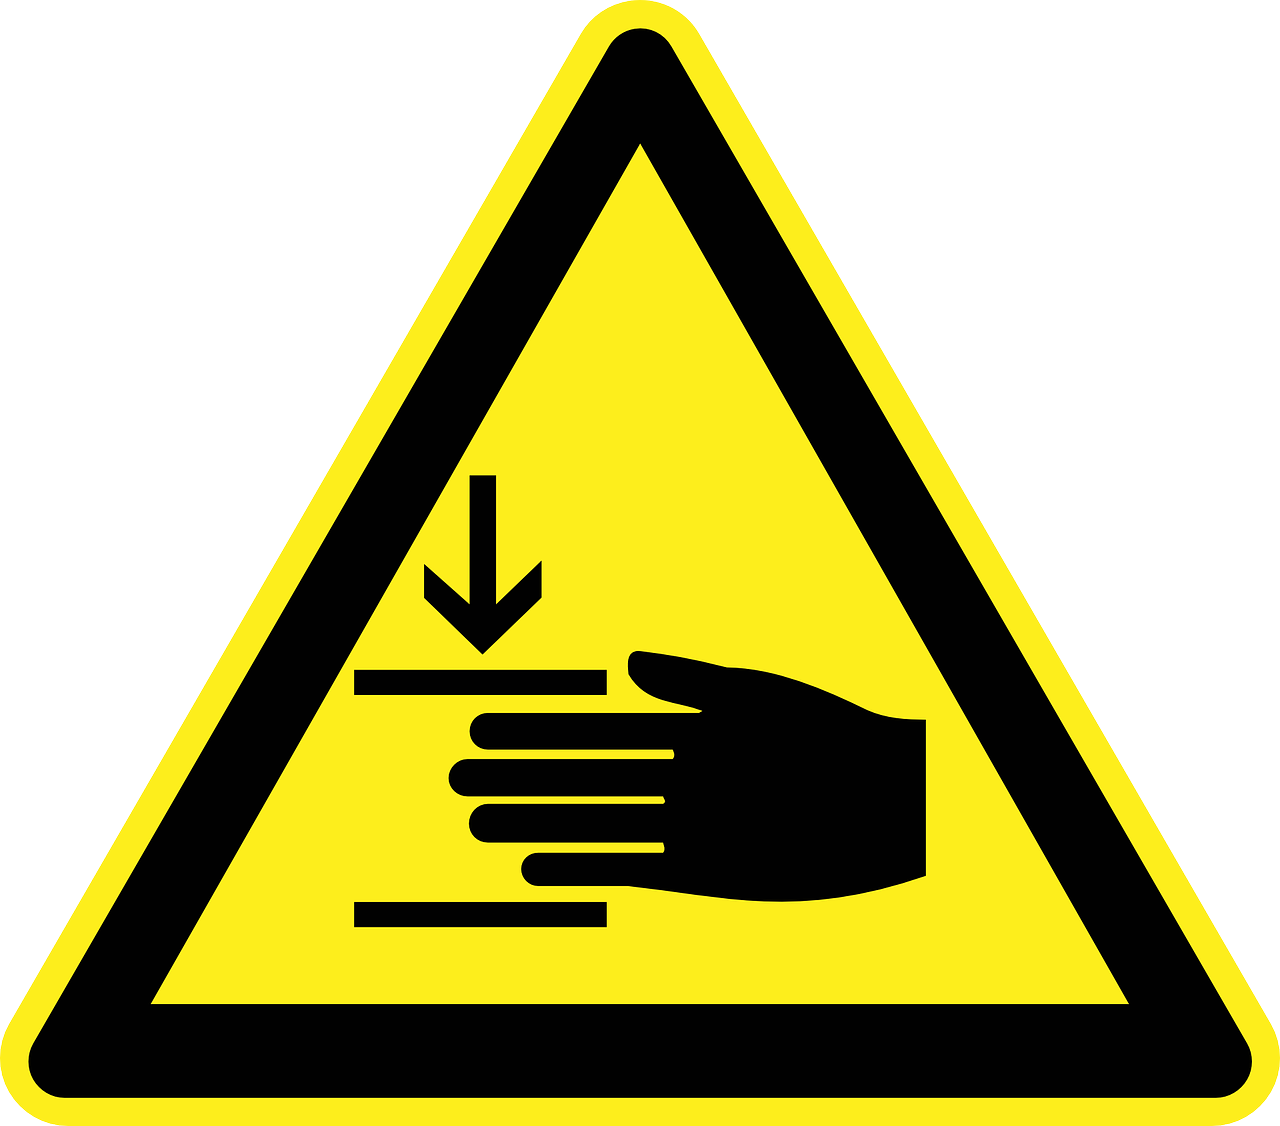 Hand,injury,crushing,danger,warning - free image from needpix.com